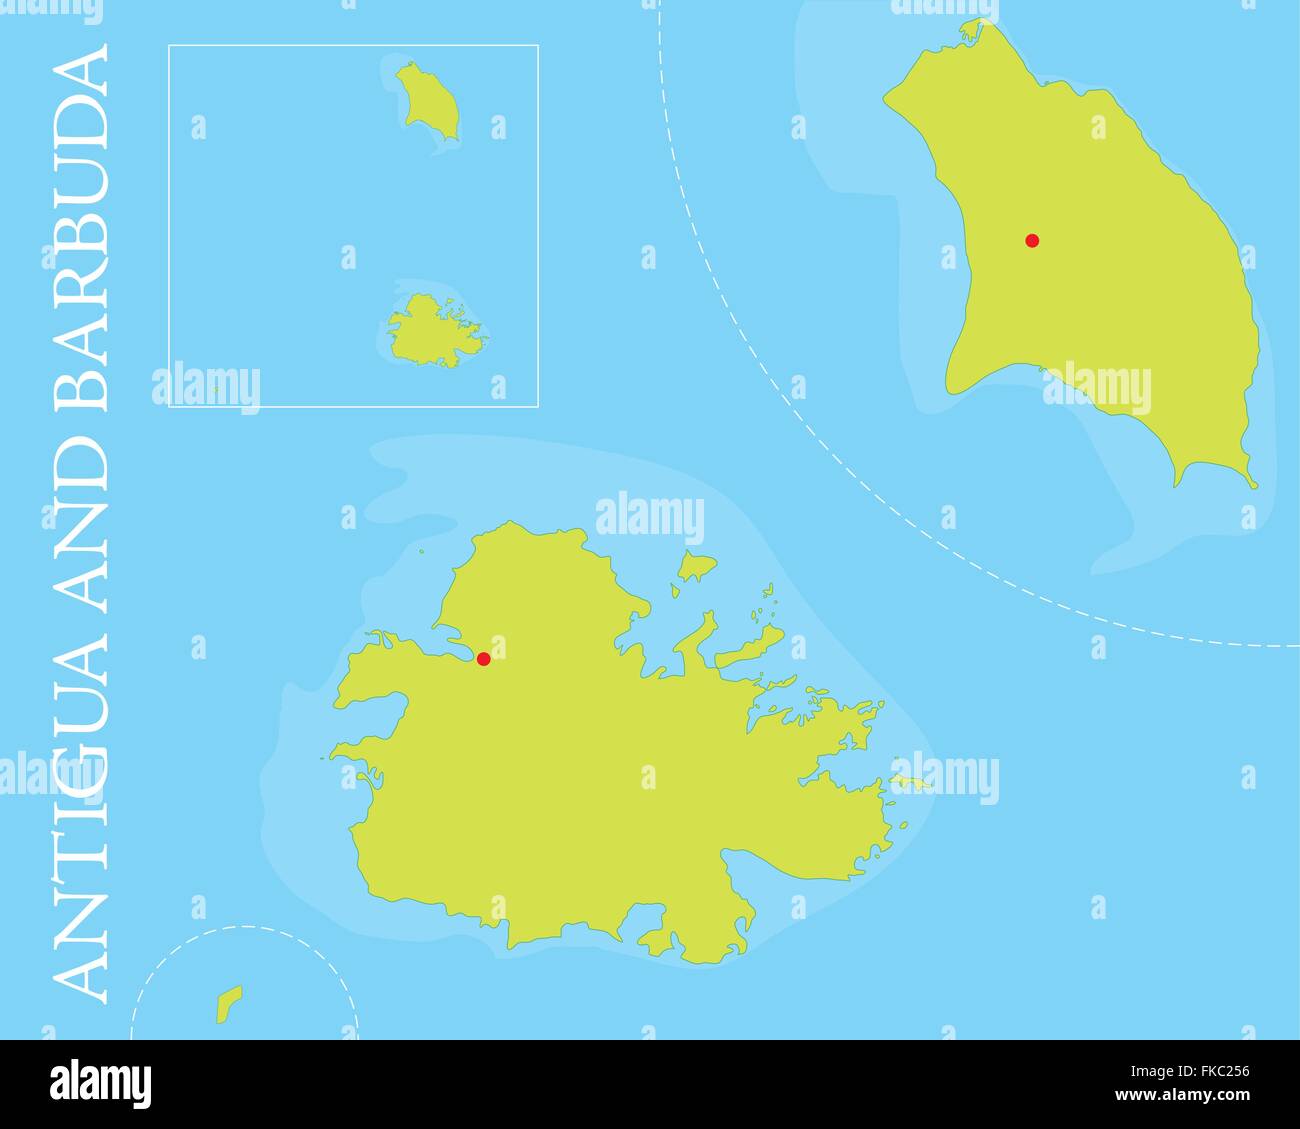 La carte d'Antigua-et-Barbuda archipel dans la mer des Caraïbes. Illustration de Vecteur